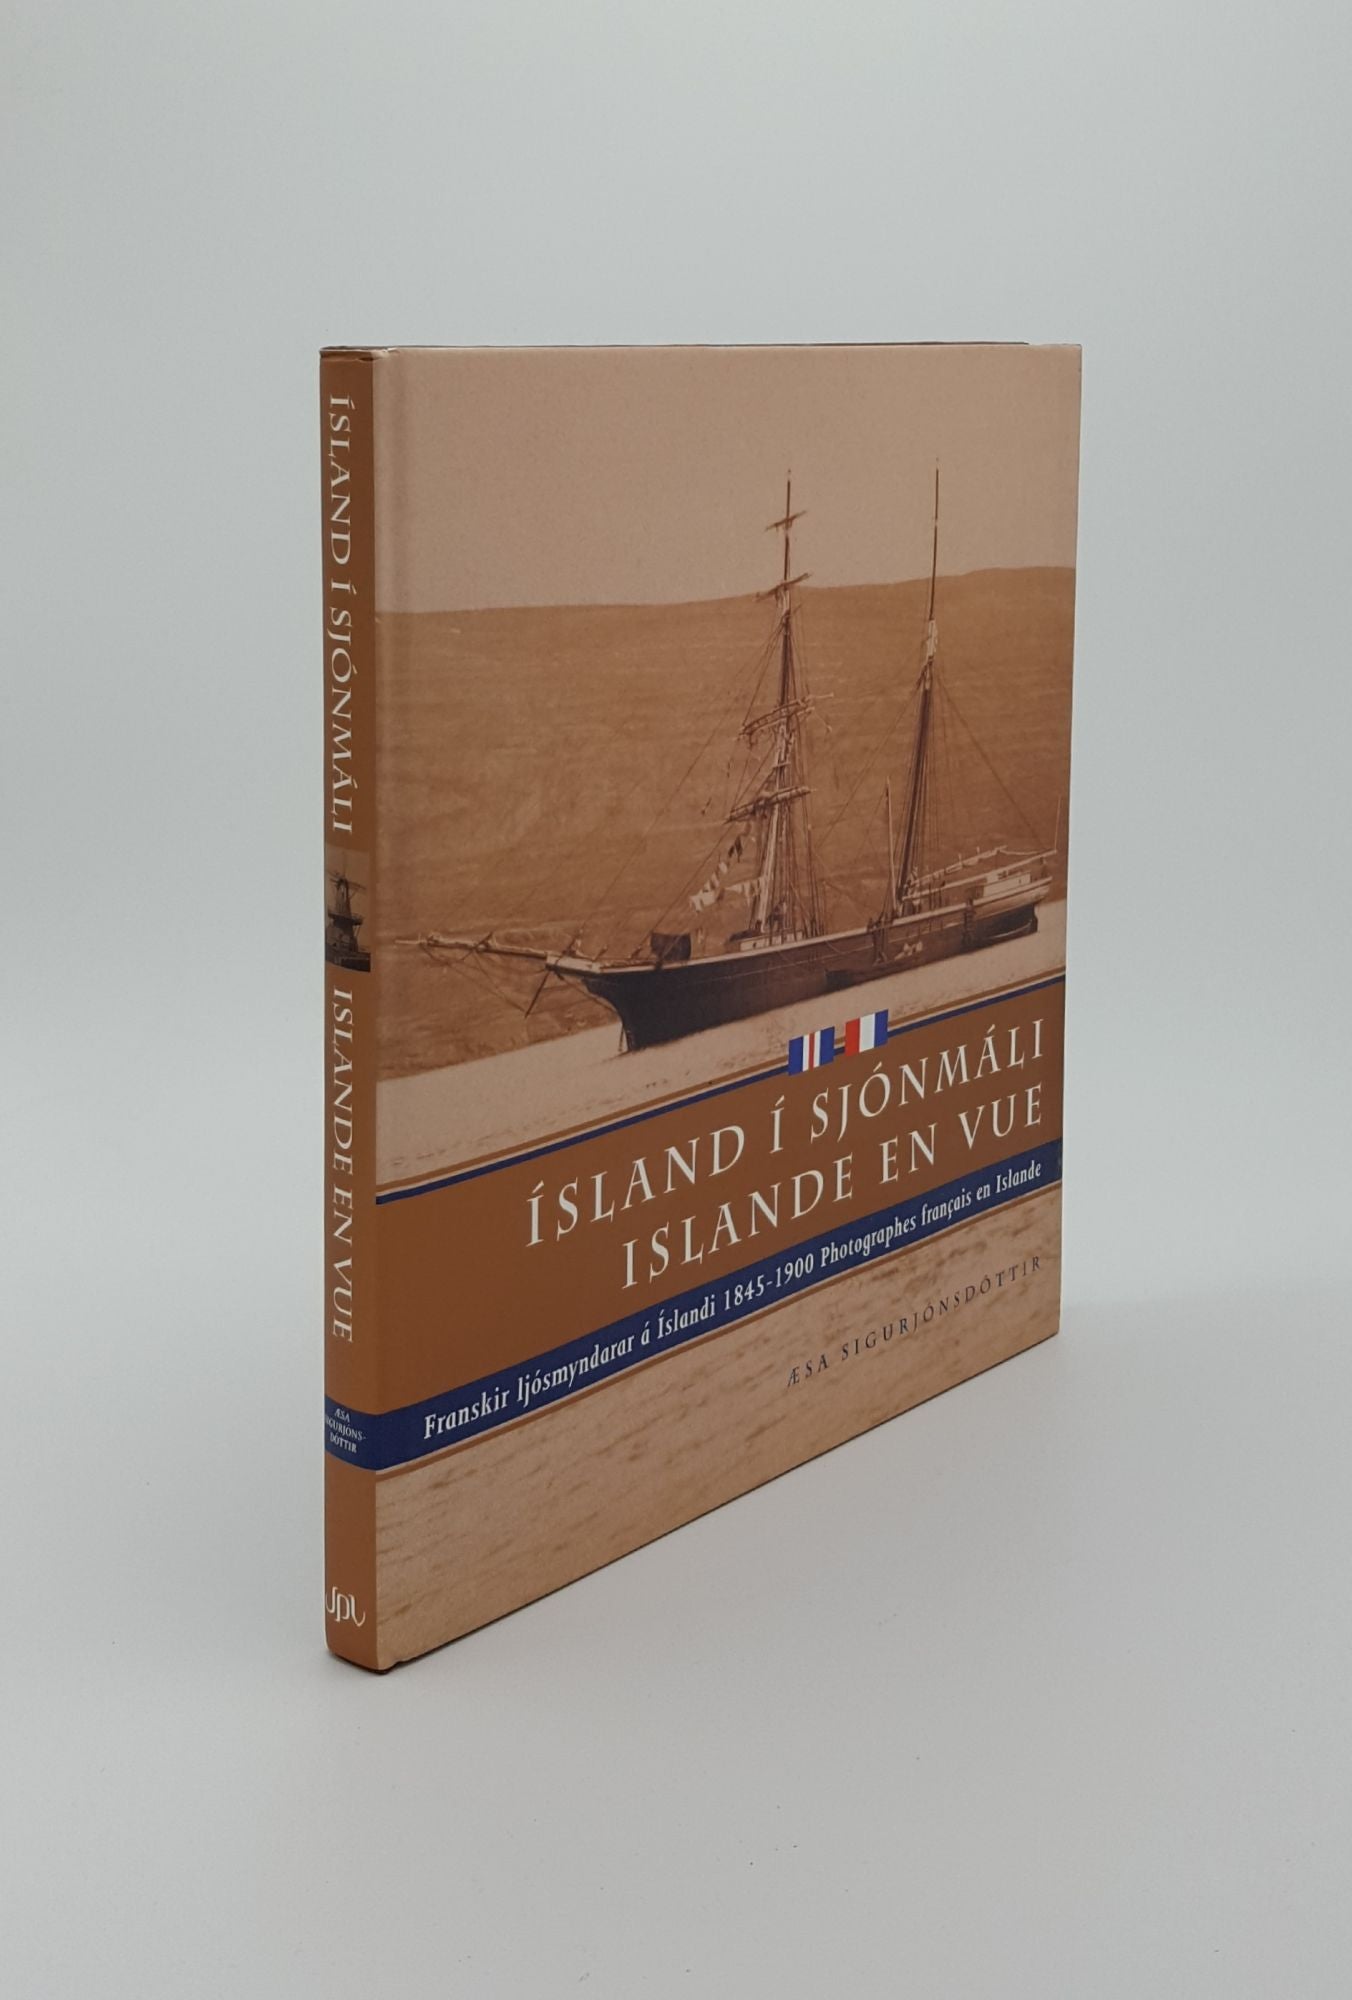 SIGURJONSDOTTIR Aesa - Island I Sjonmali Franskir Ljosmyndarar Aislandi 1845-1900 Islande En Vue Photographes Francais En Islande